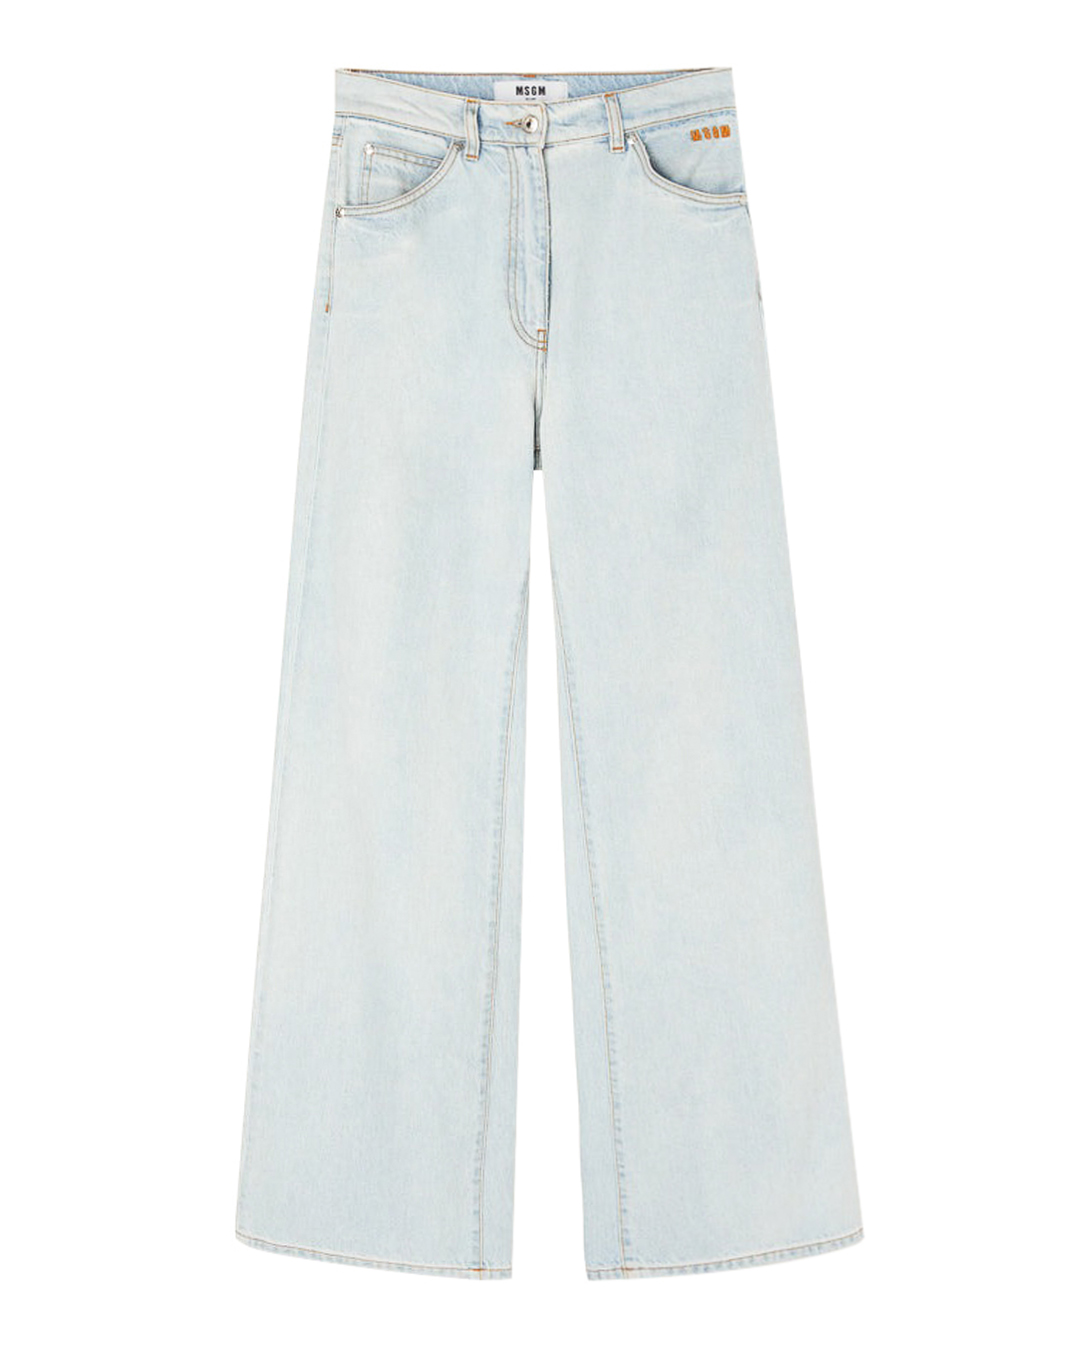 широкие джинсы MSGM белые рваные широкие джинсы с высокой талией в стиле 90 х twoss22je0687